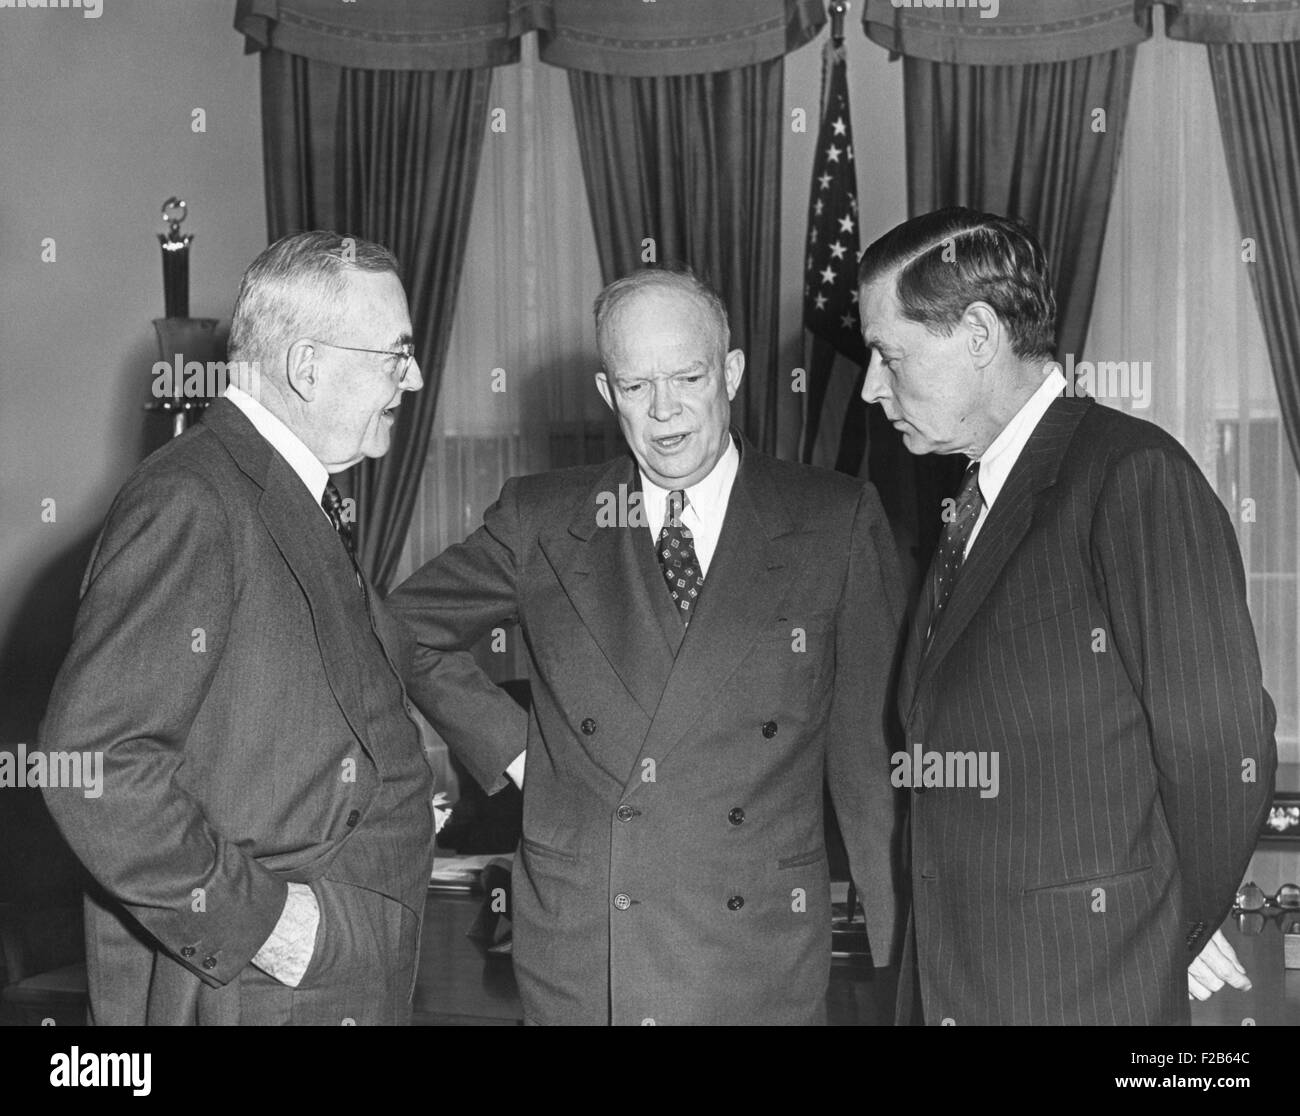 Präsident Eisenhower im Gespräch mit Sek. stand John Foster Dulles, Charles Bohlen. Bolan (rechts) war Botschafter in UdSSR zu benennen. 2. April 1953. -(BSLOC 2014 16 132) Stockfoto